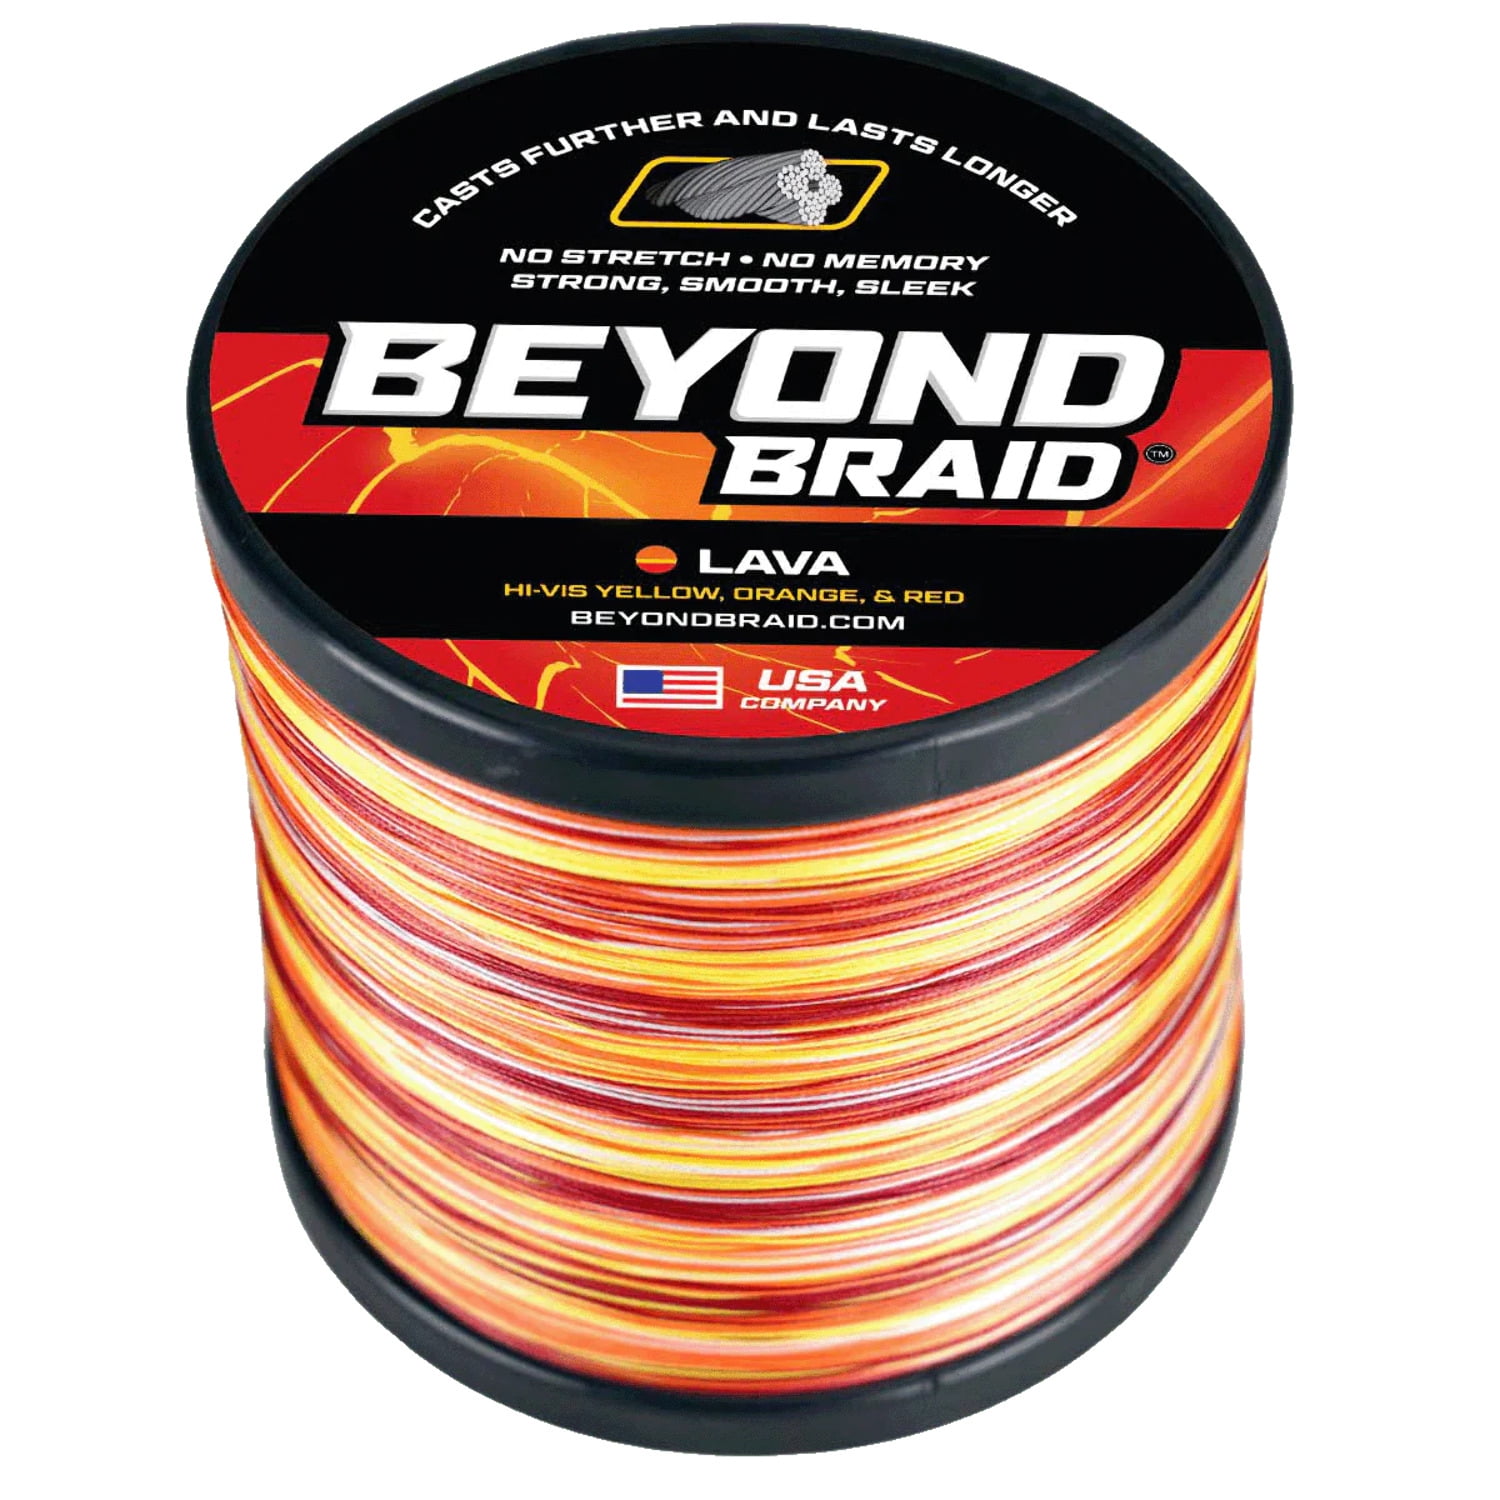 Beyond Braid Pink Python 300 Yards 15LB 